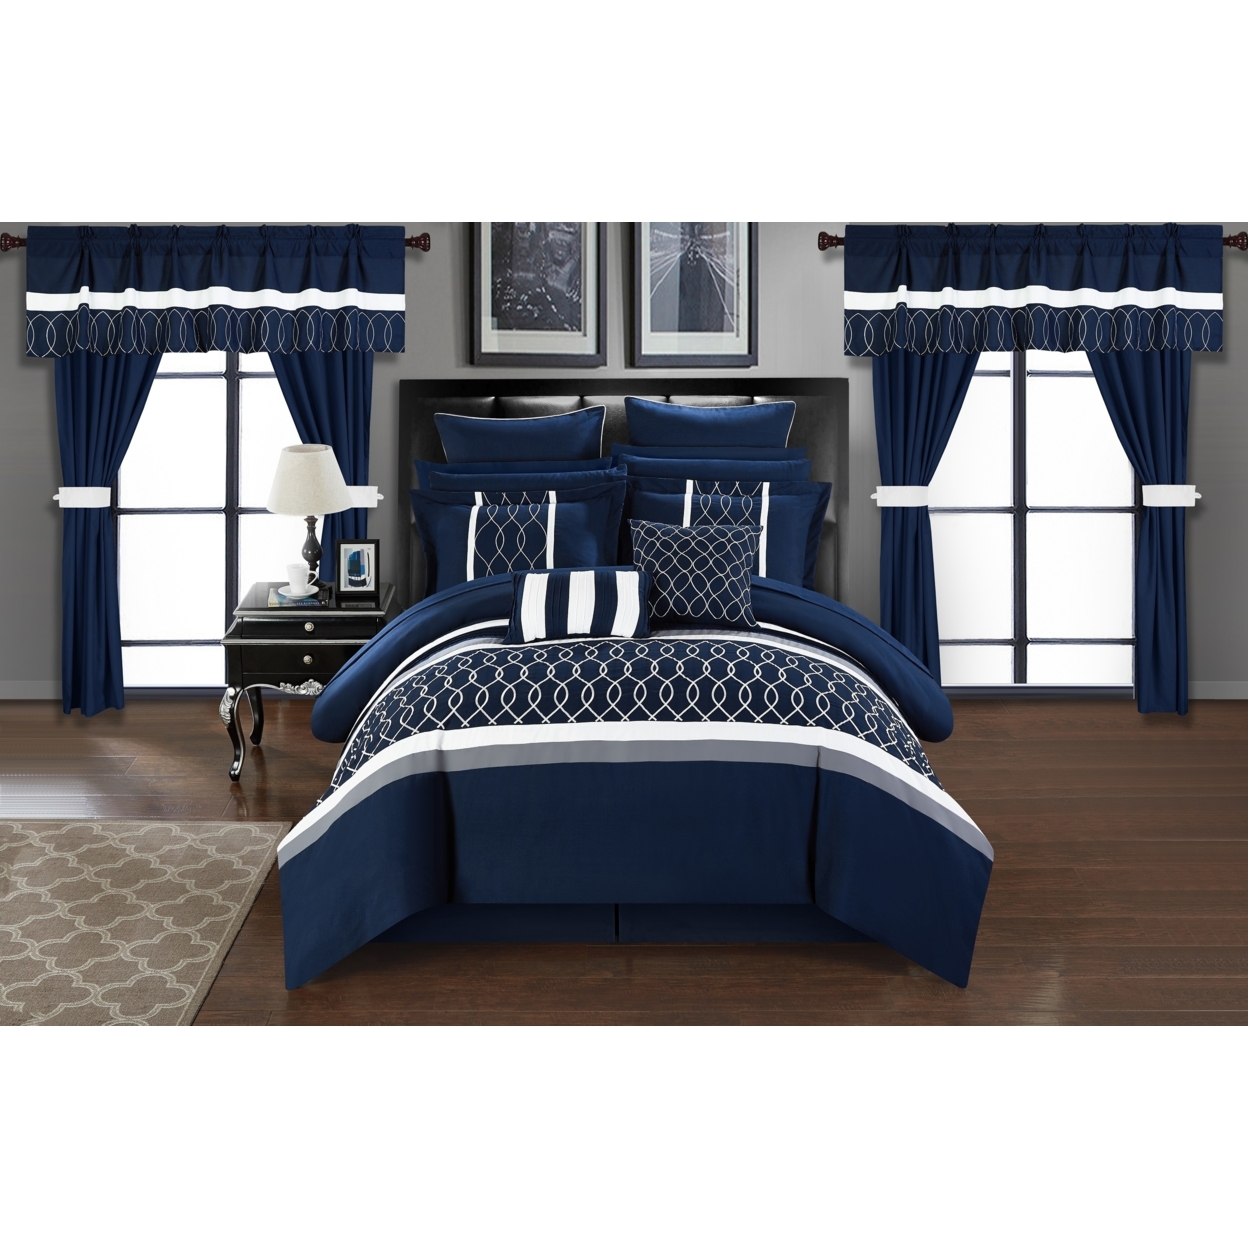 Topaz 24 Piece Comforter Bed In A Bag Pleated Ruffled Designer Embellished Bedding Set - Navy, Queen